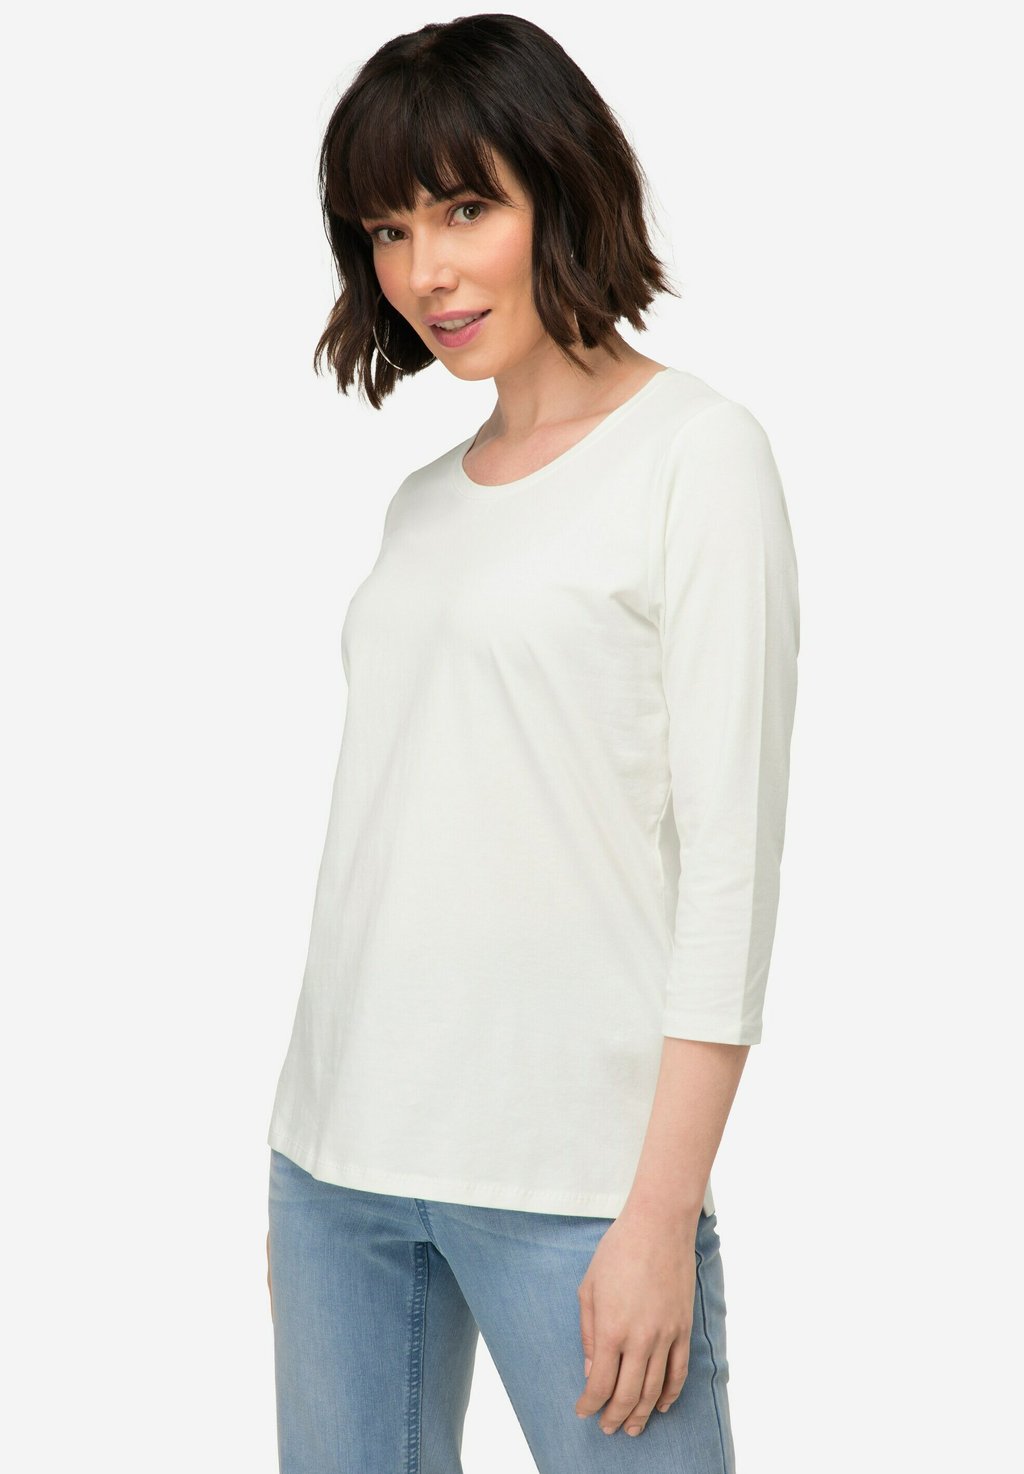 Рубашка с длинным рукавом LAURASØN, цвет off white рубашка с длинным рукавом mango kids цвет off white